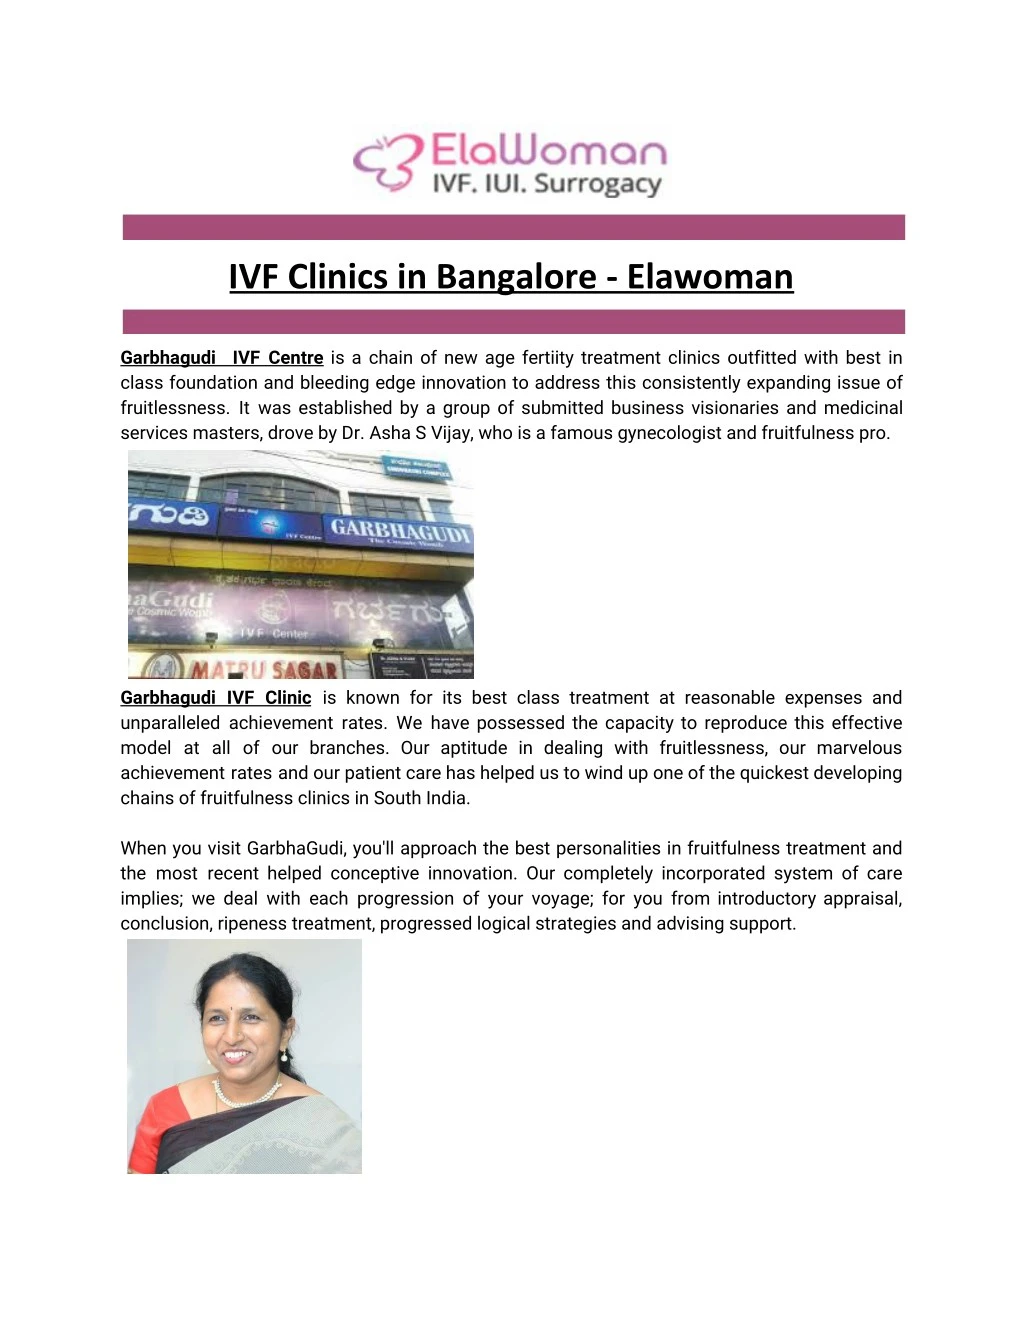 ivf clinics in bangalore elawoman